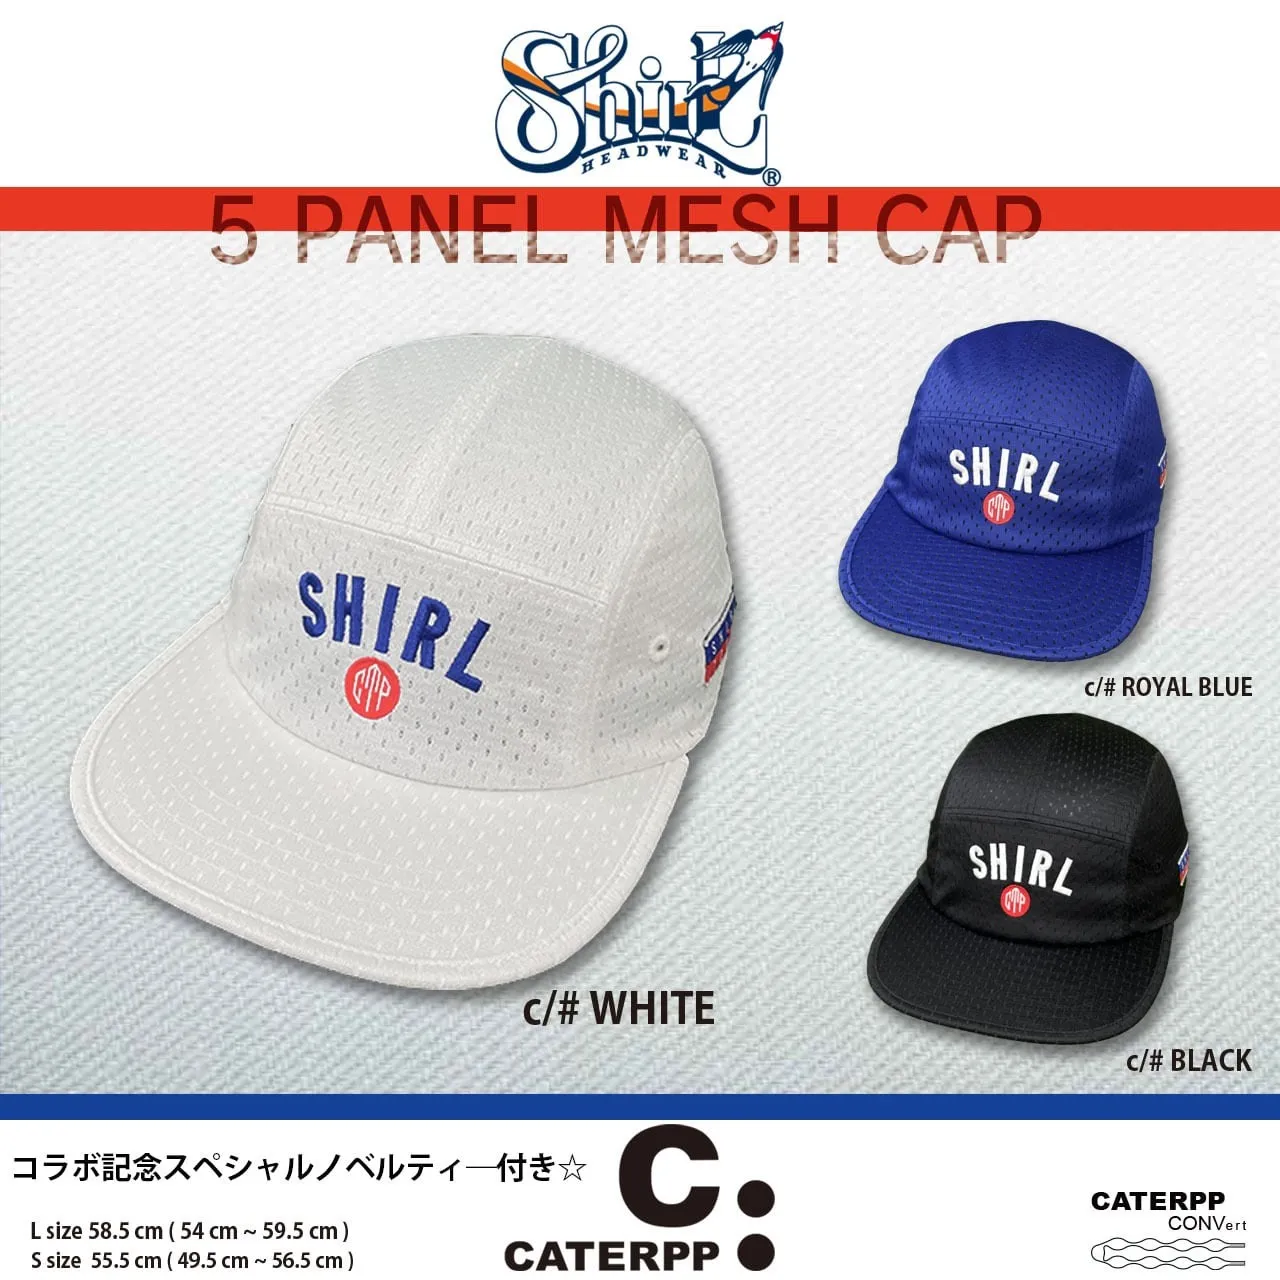 【CONV】 CATERPP SB  SHIRL HEADWEAR x CATERPP 5 PANEL MESH CAP (スペシャルノベルティー付き)